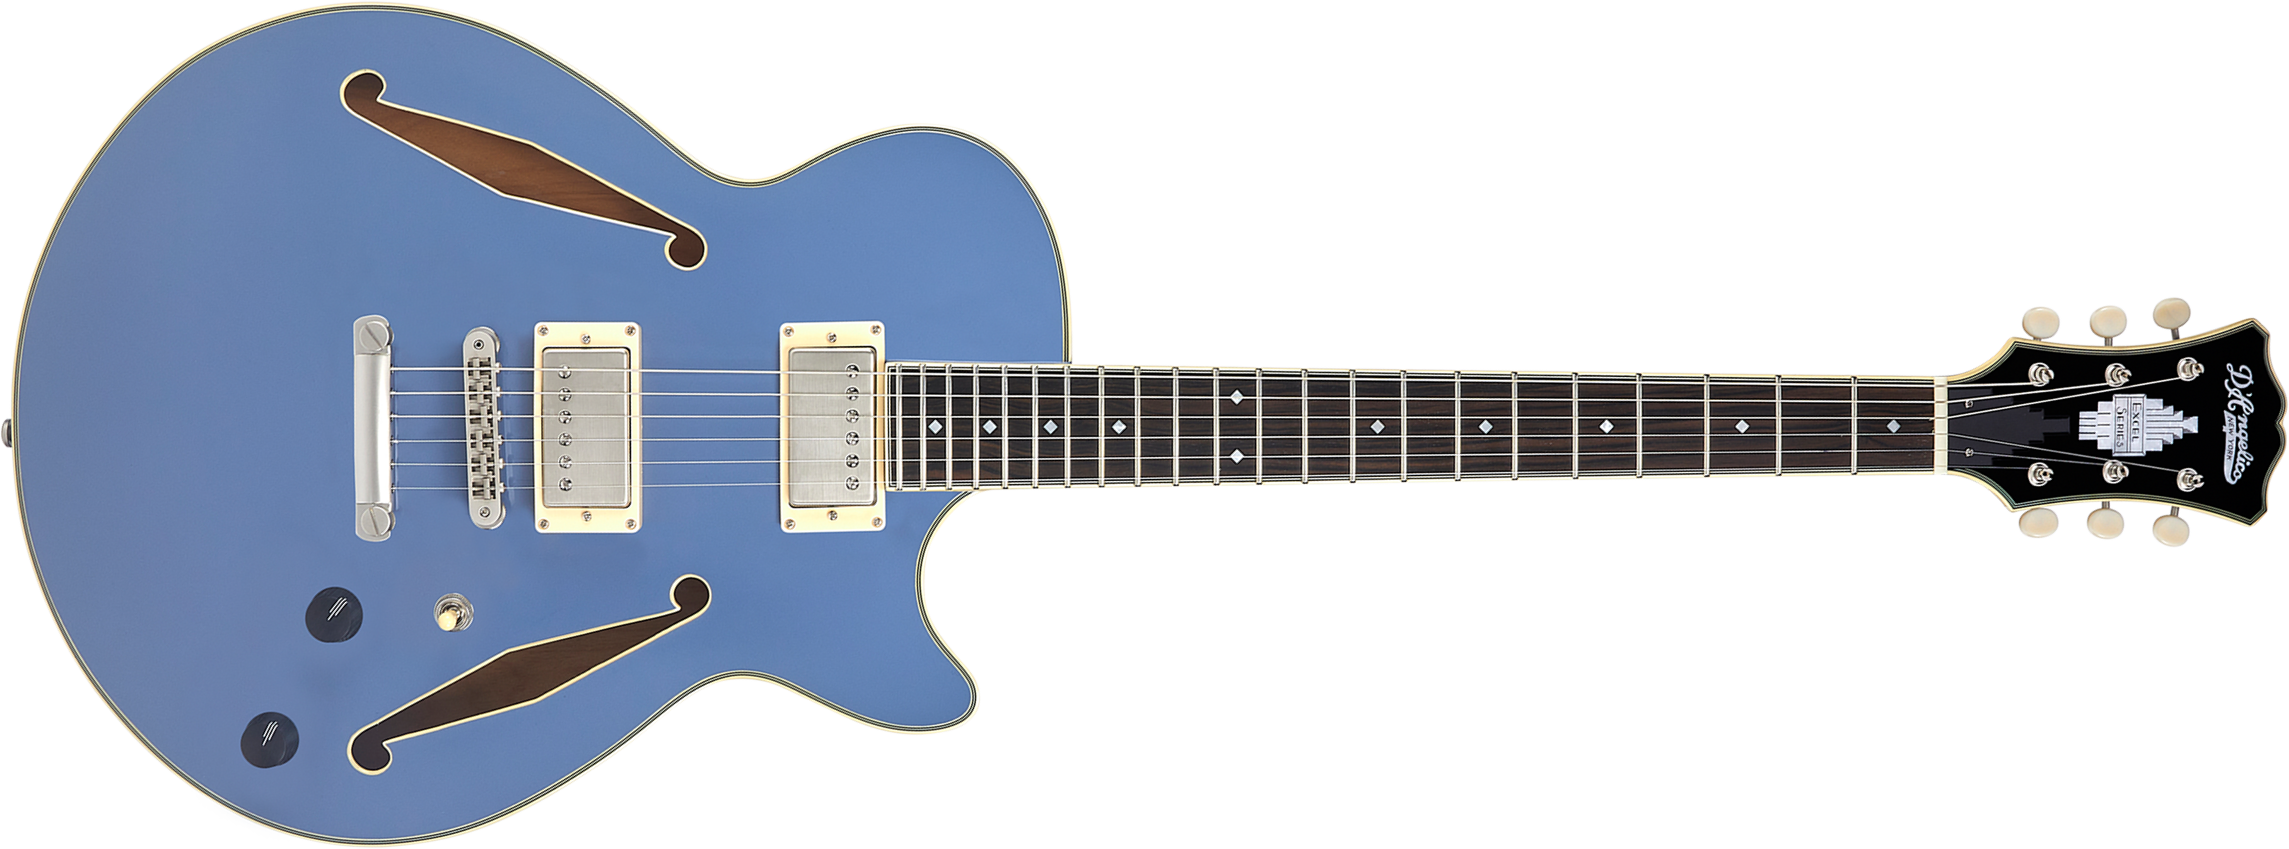 D'angelico Ss Tour Excel 2h Ht Eb - Slate Blue - Semi hollow elektriche gitaar - Main picture